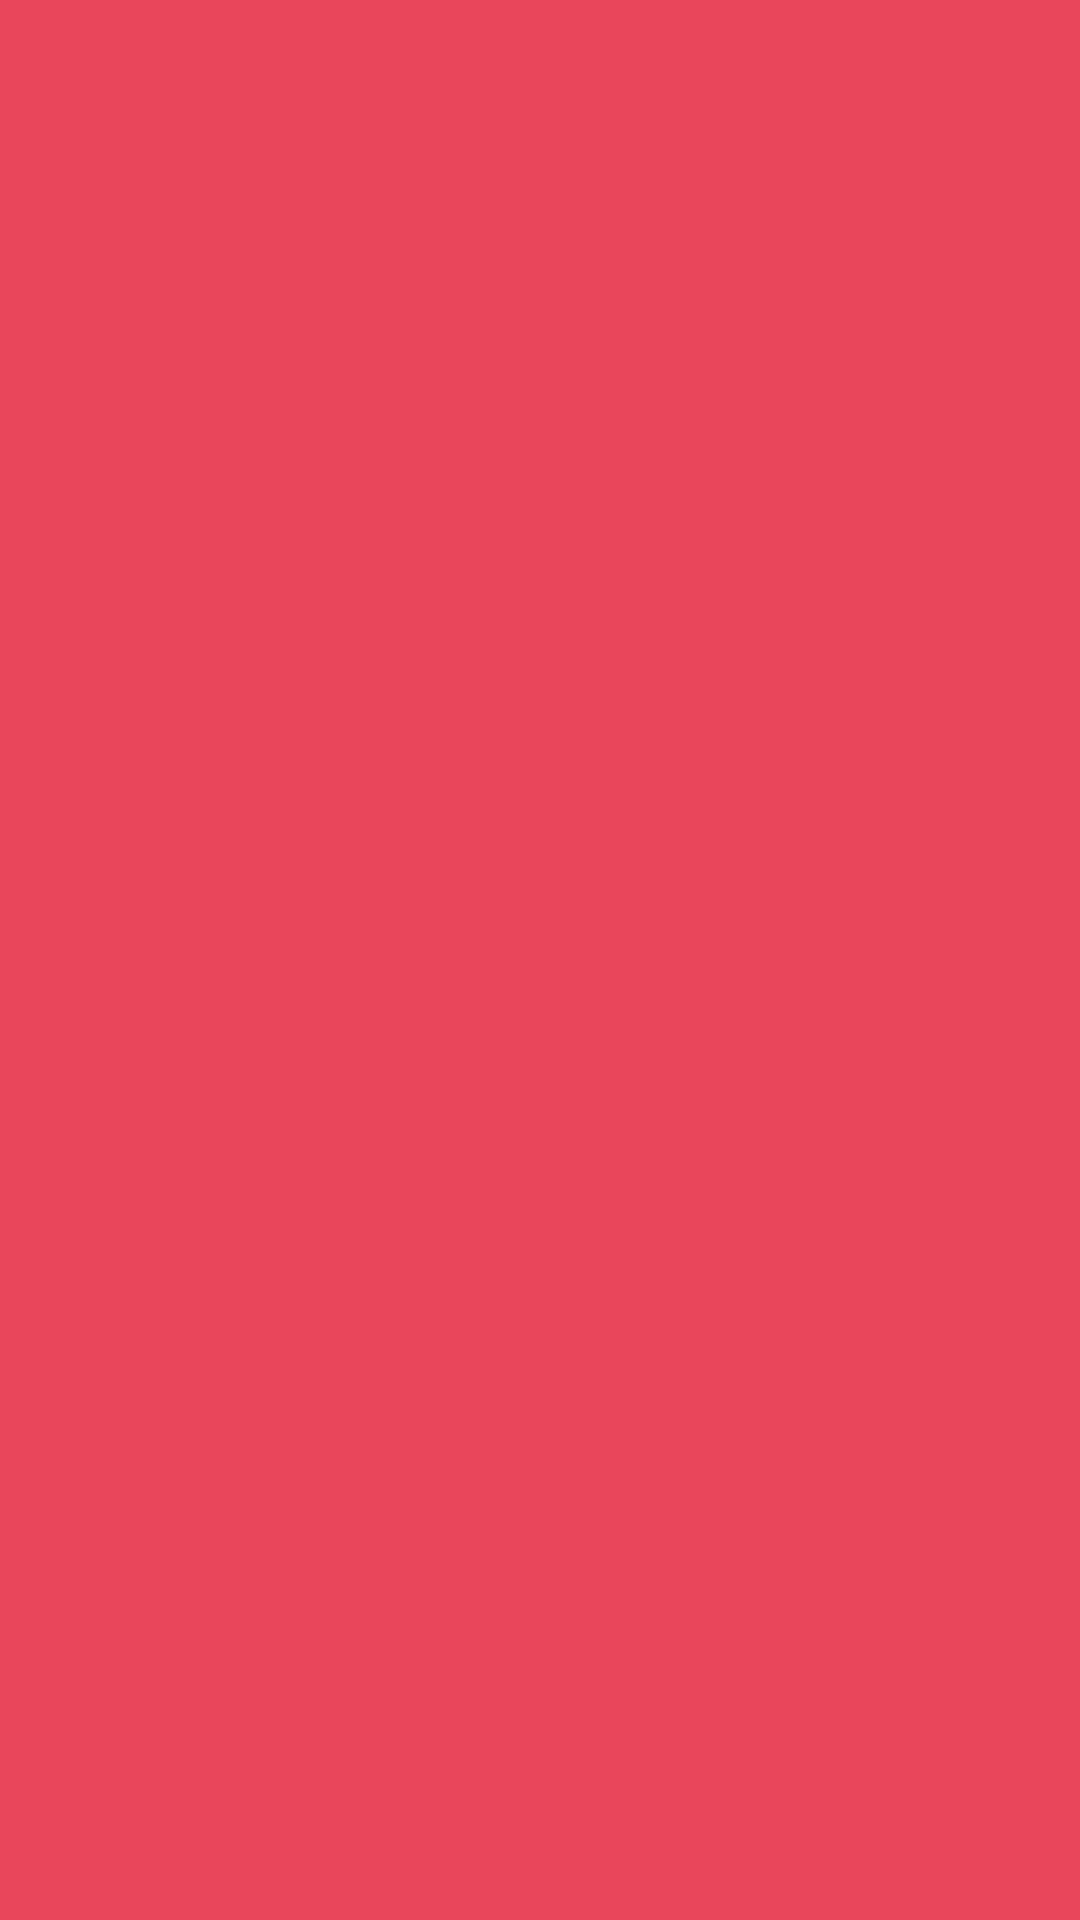 Minimalism Plain Simple Pink Background